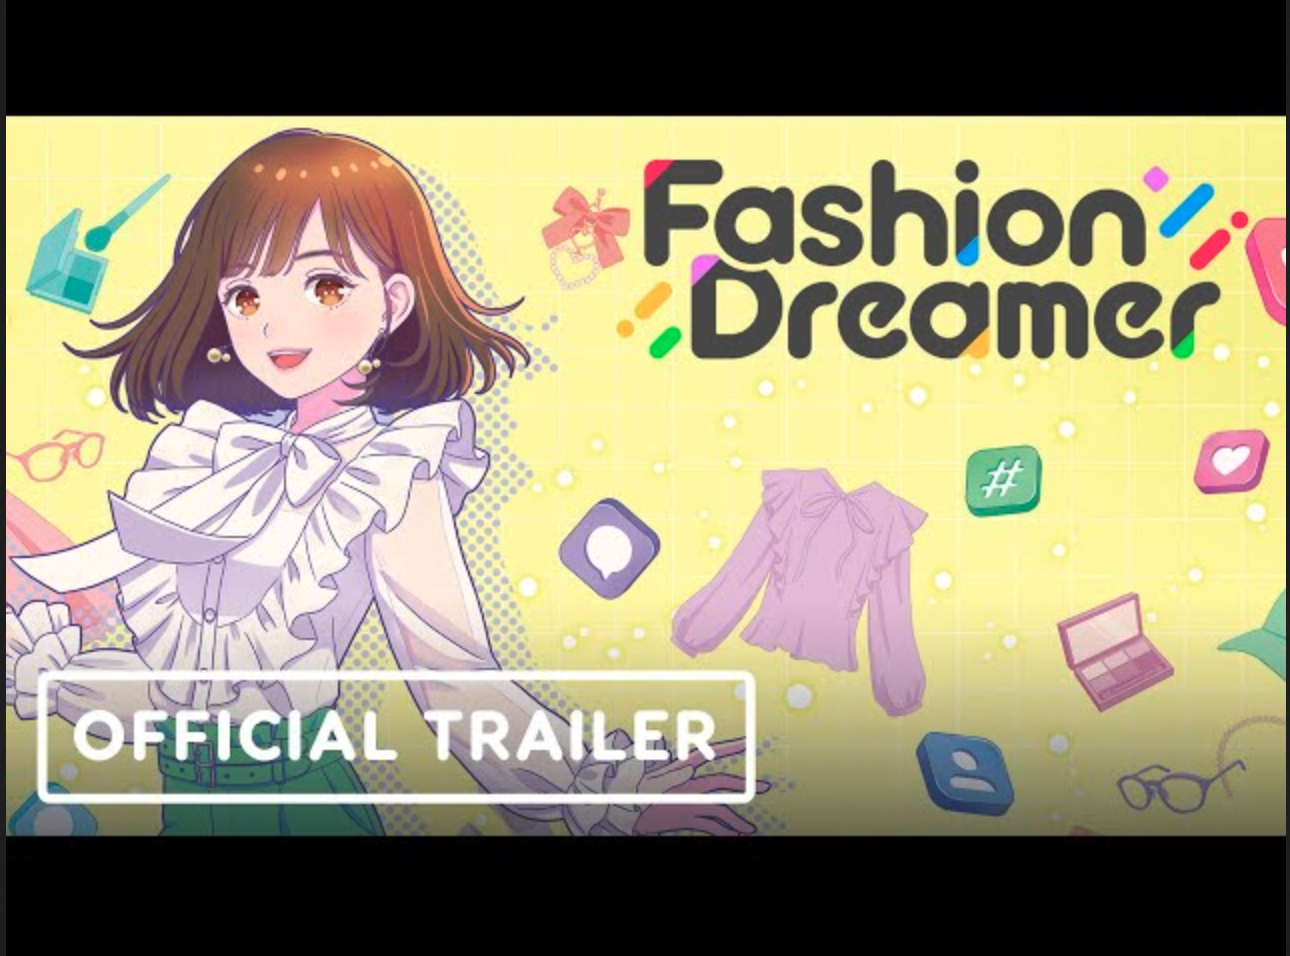 Fashion Dreamer, Nintendo Switch games, Games